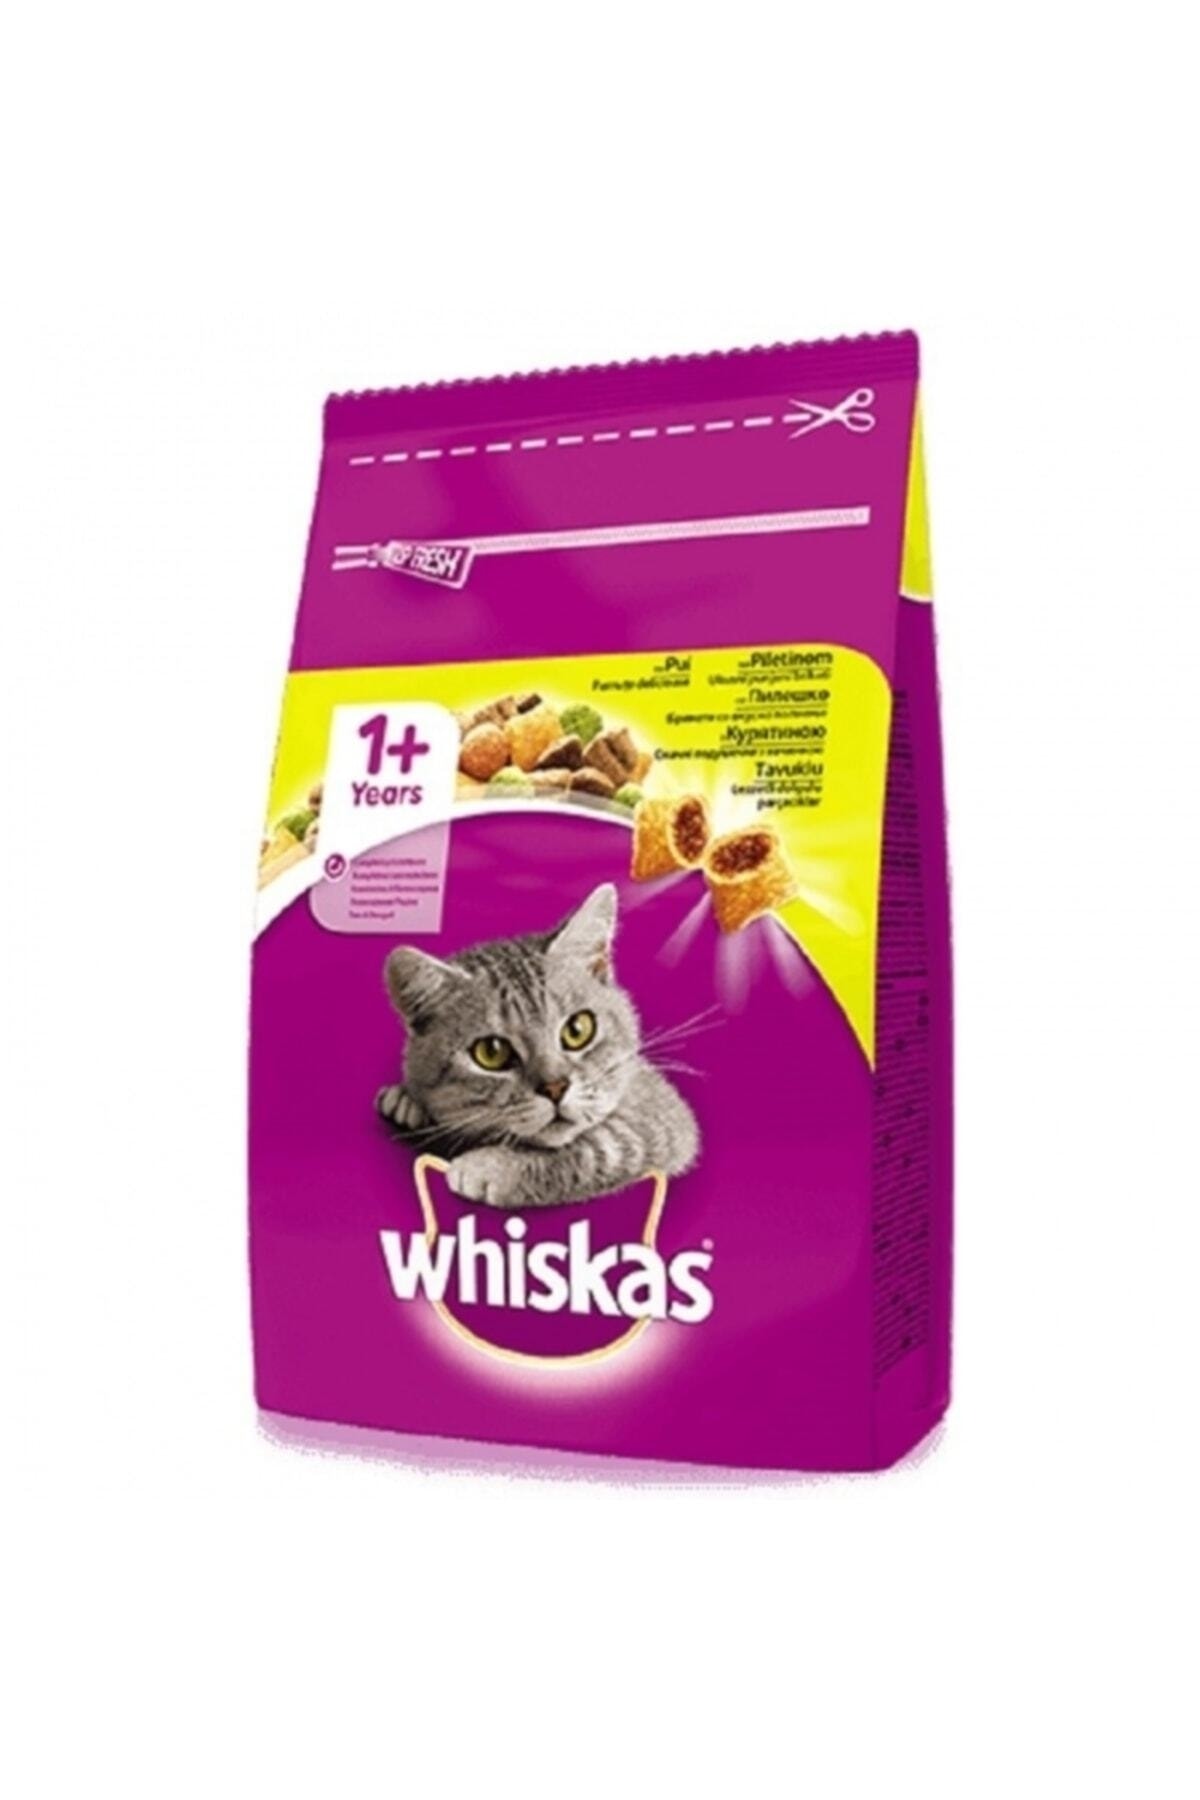 Whiskas Tavuk&sebze Kedi Maması - 1,4kg